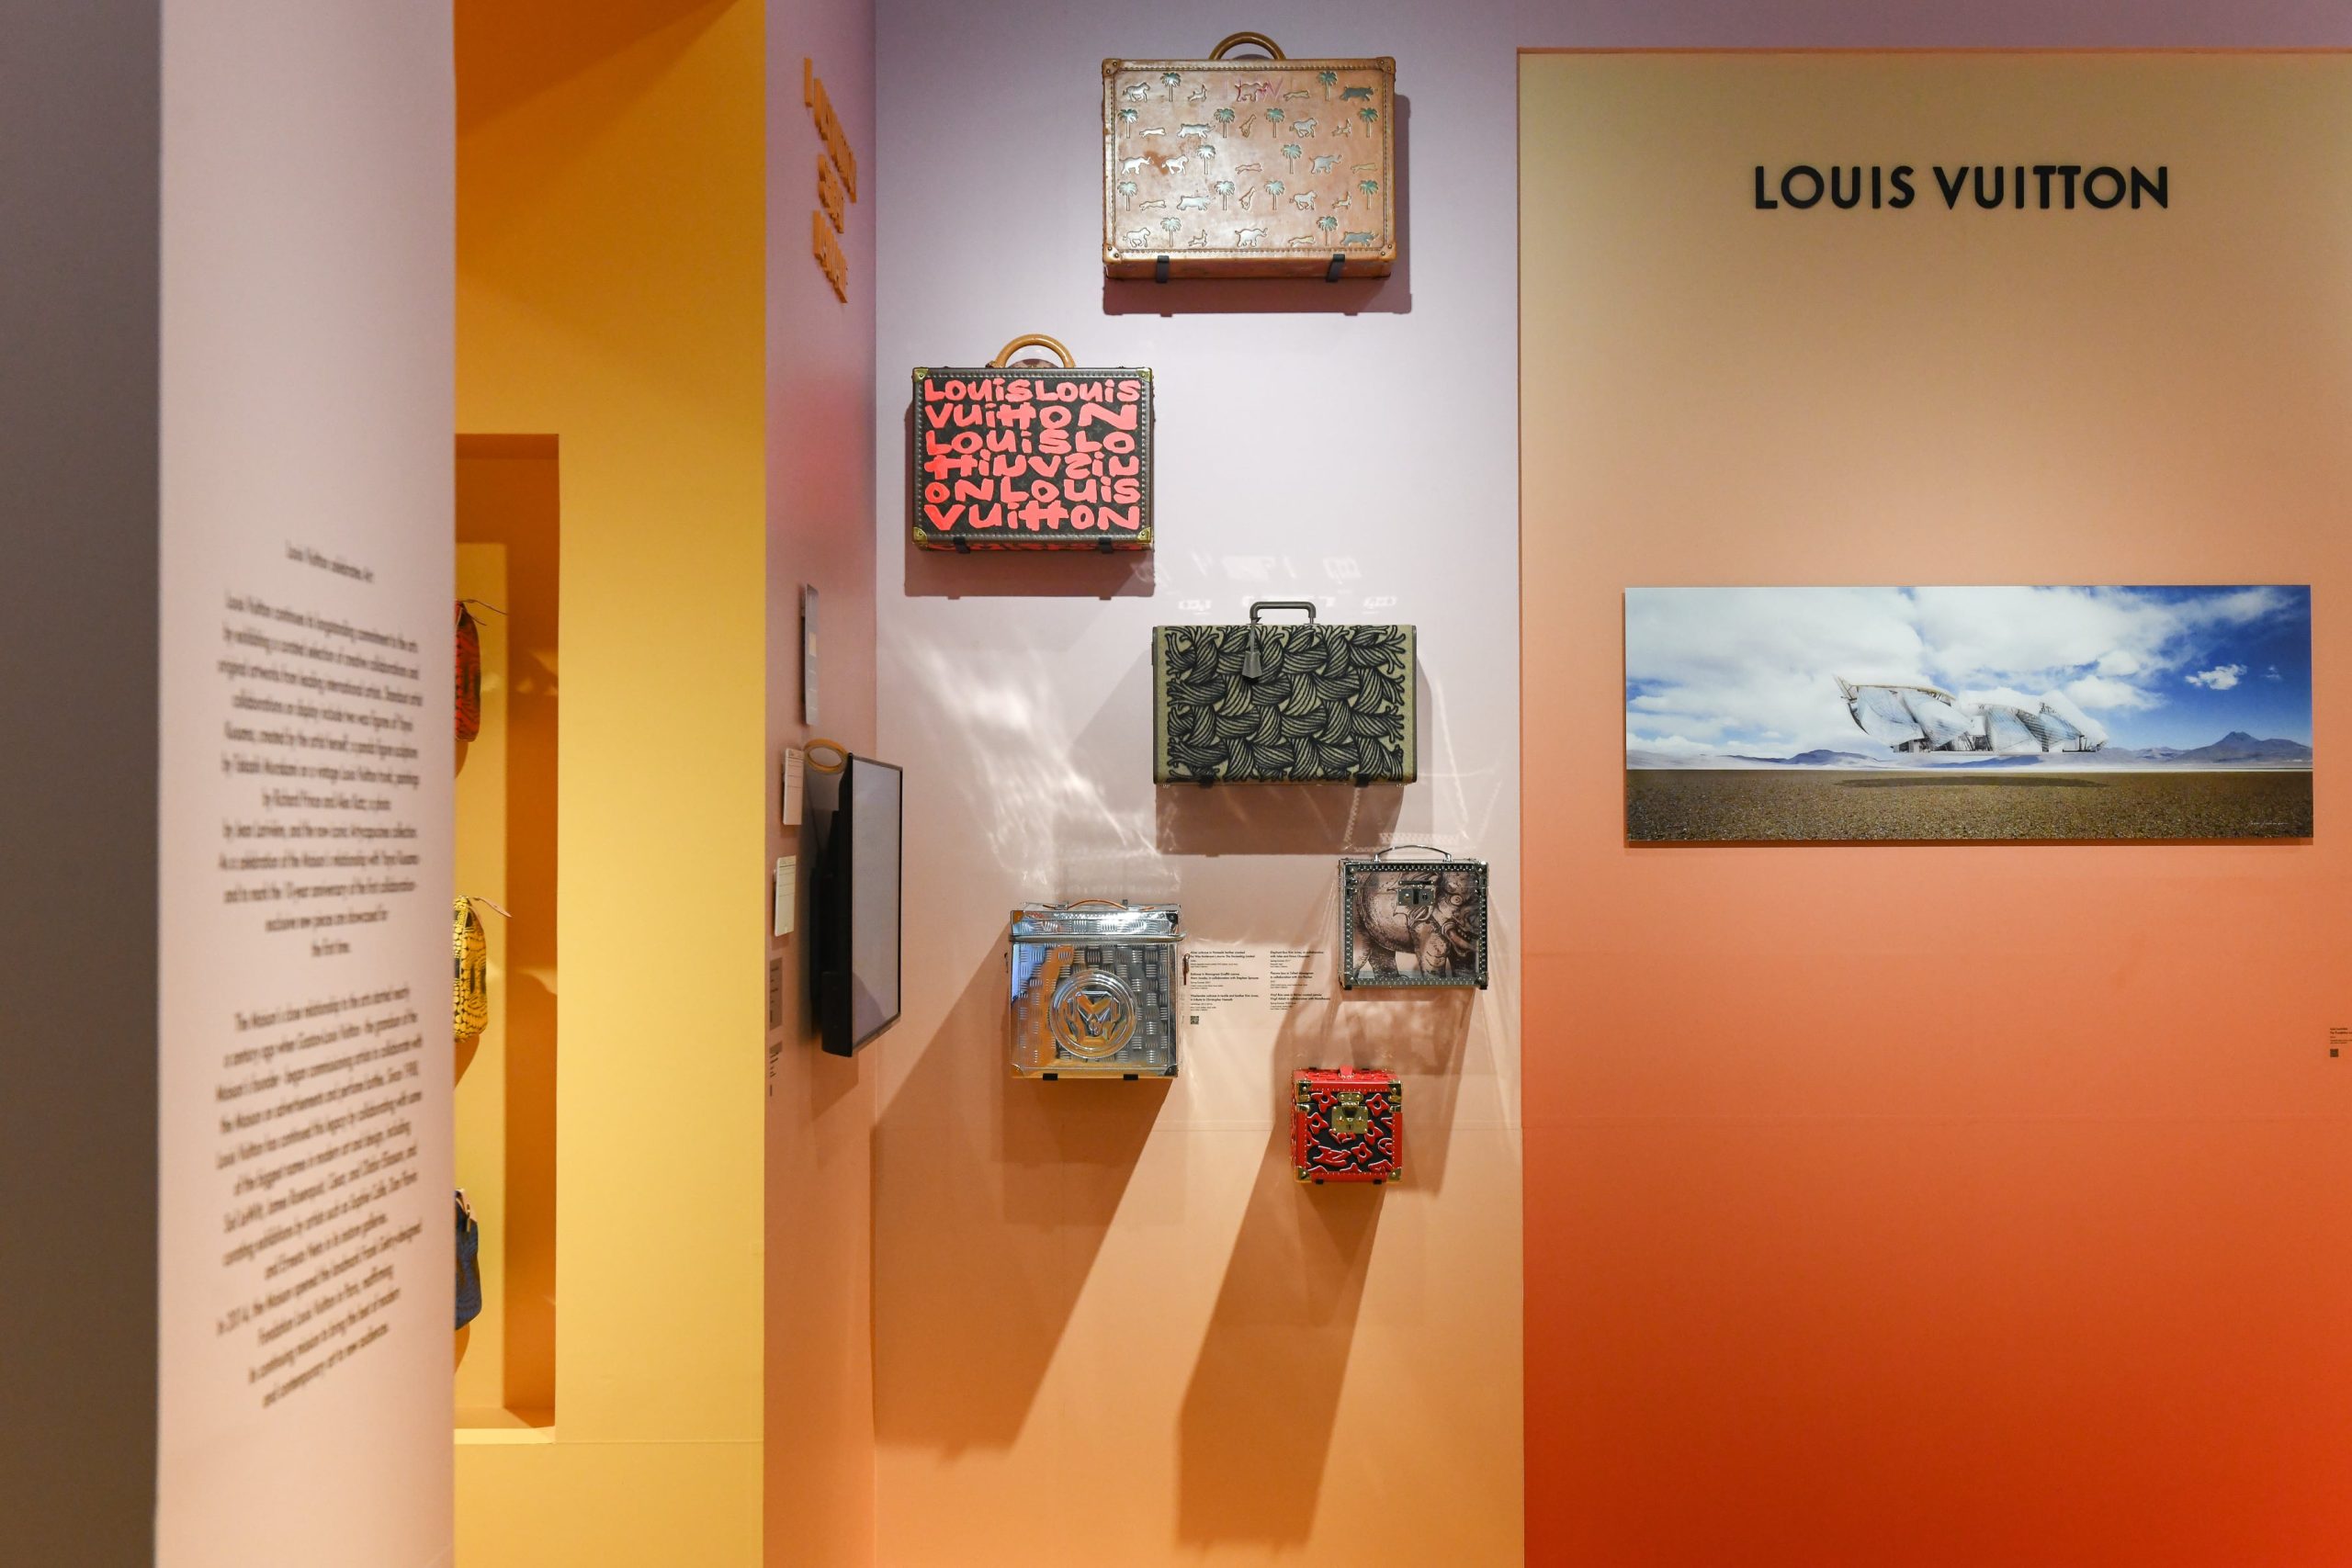 Louis Vuitton celebrates Art at Art Basel Miami